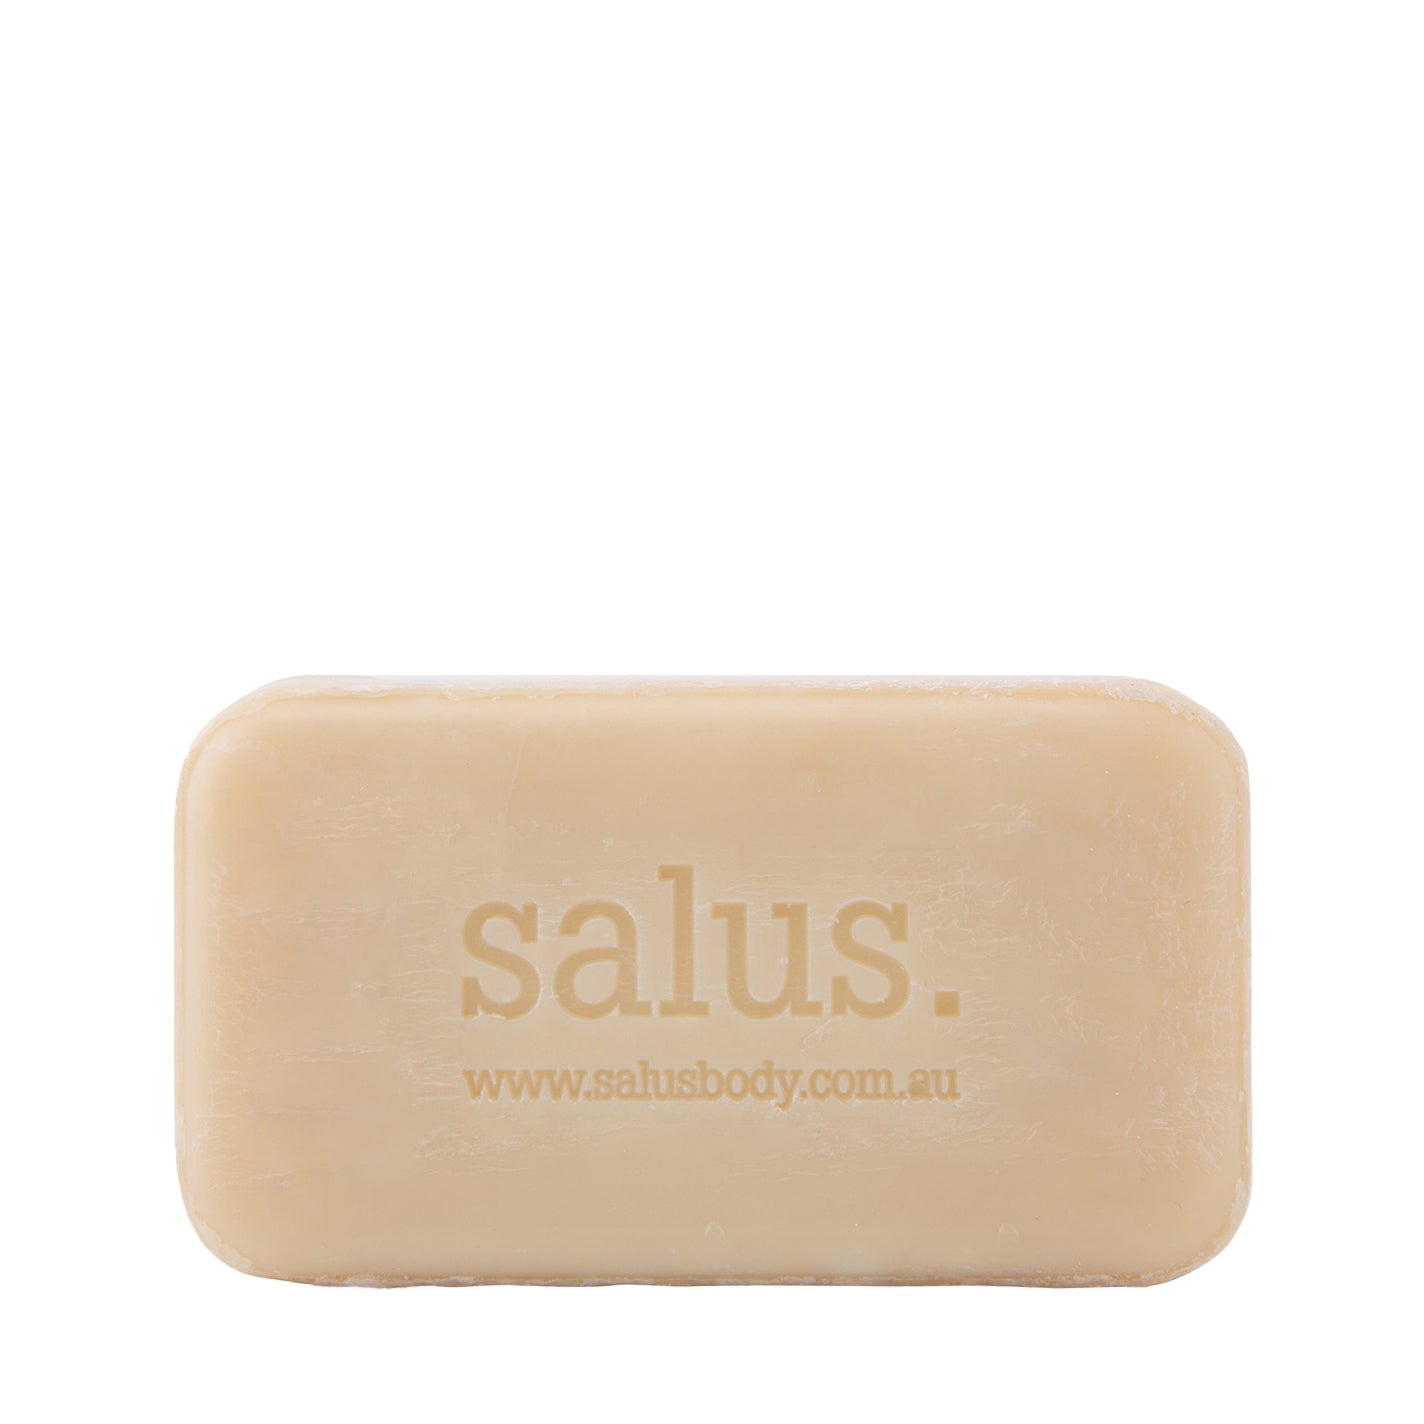 Salus White Clay Soap